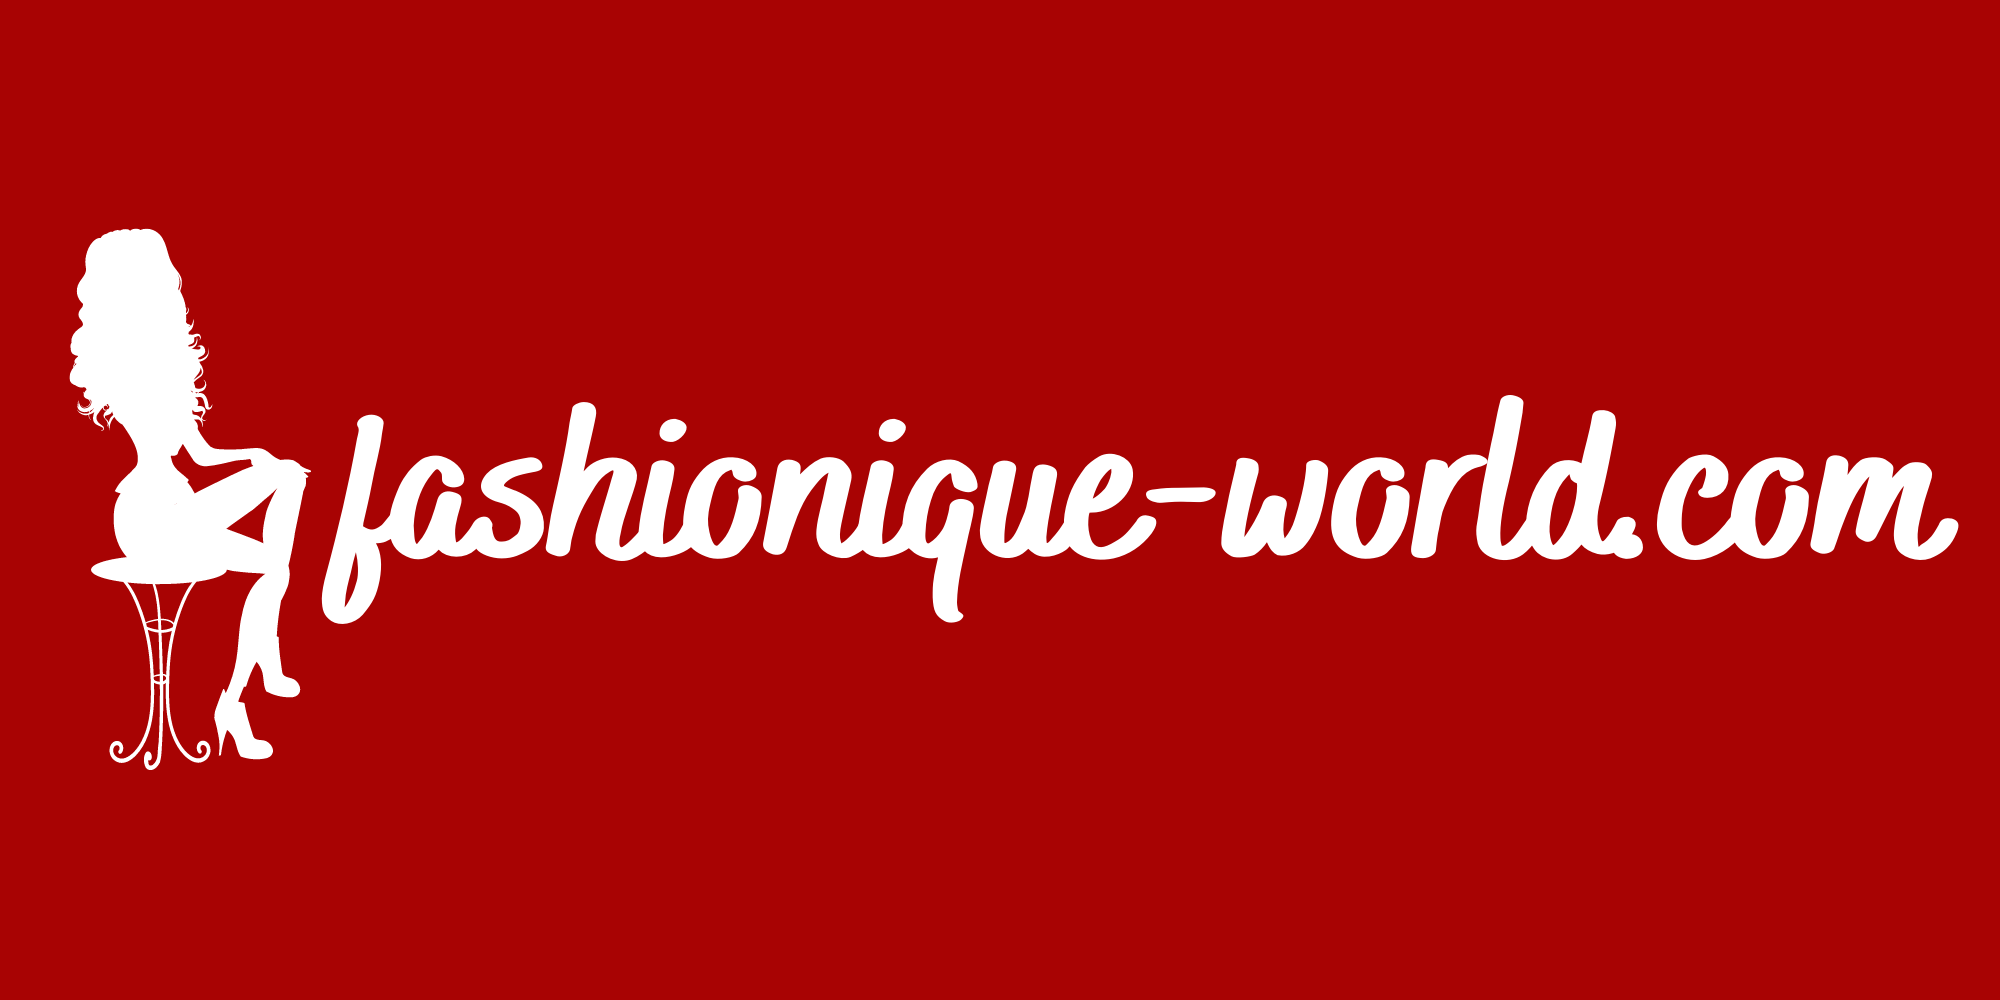 fashionique-world.com